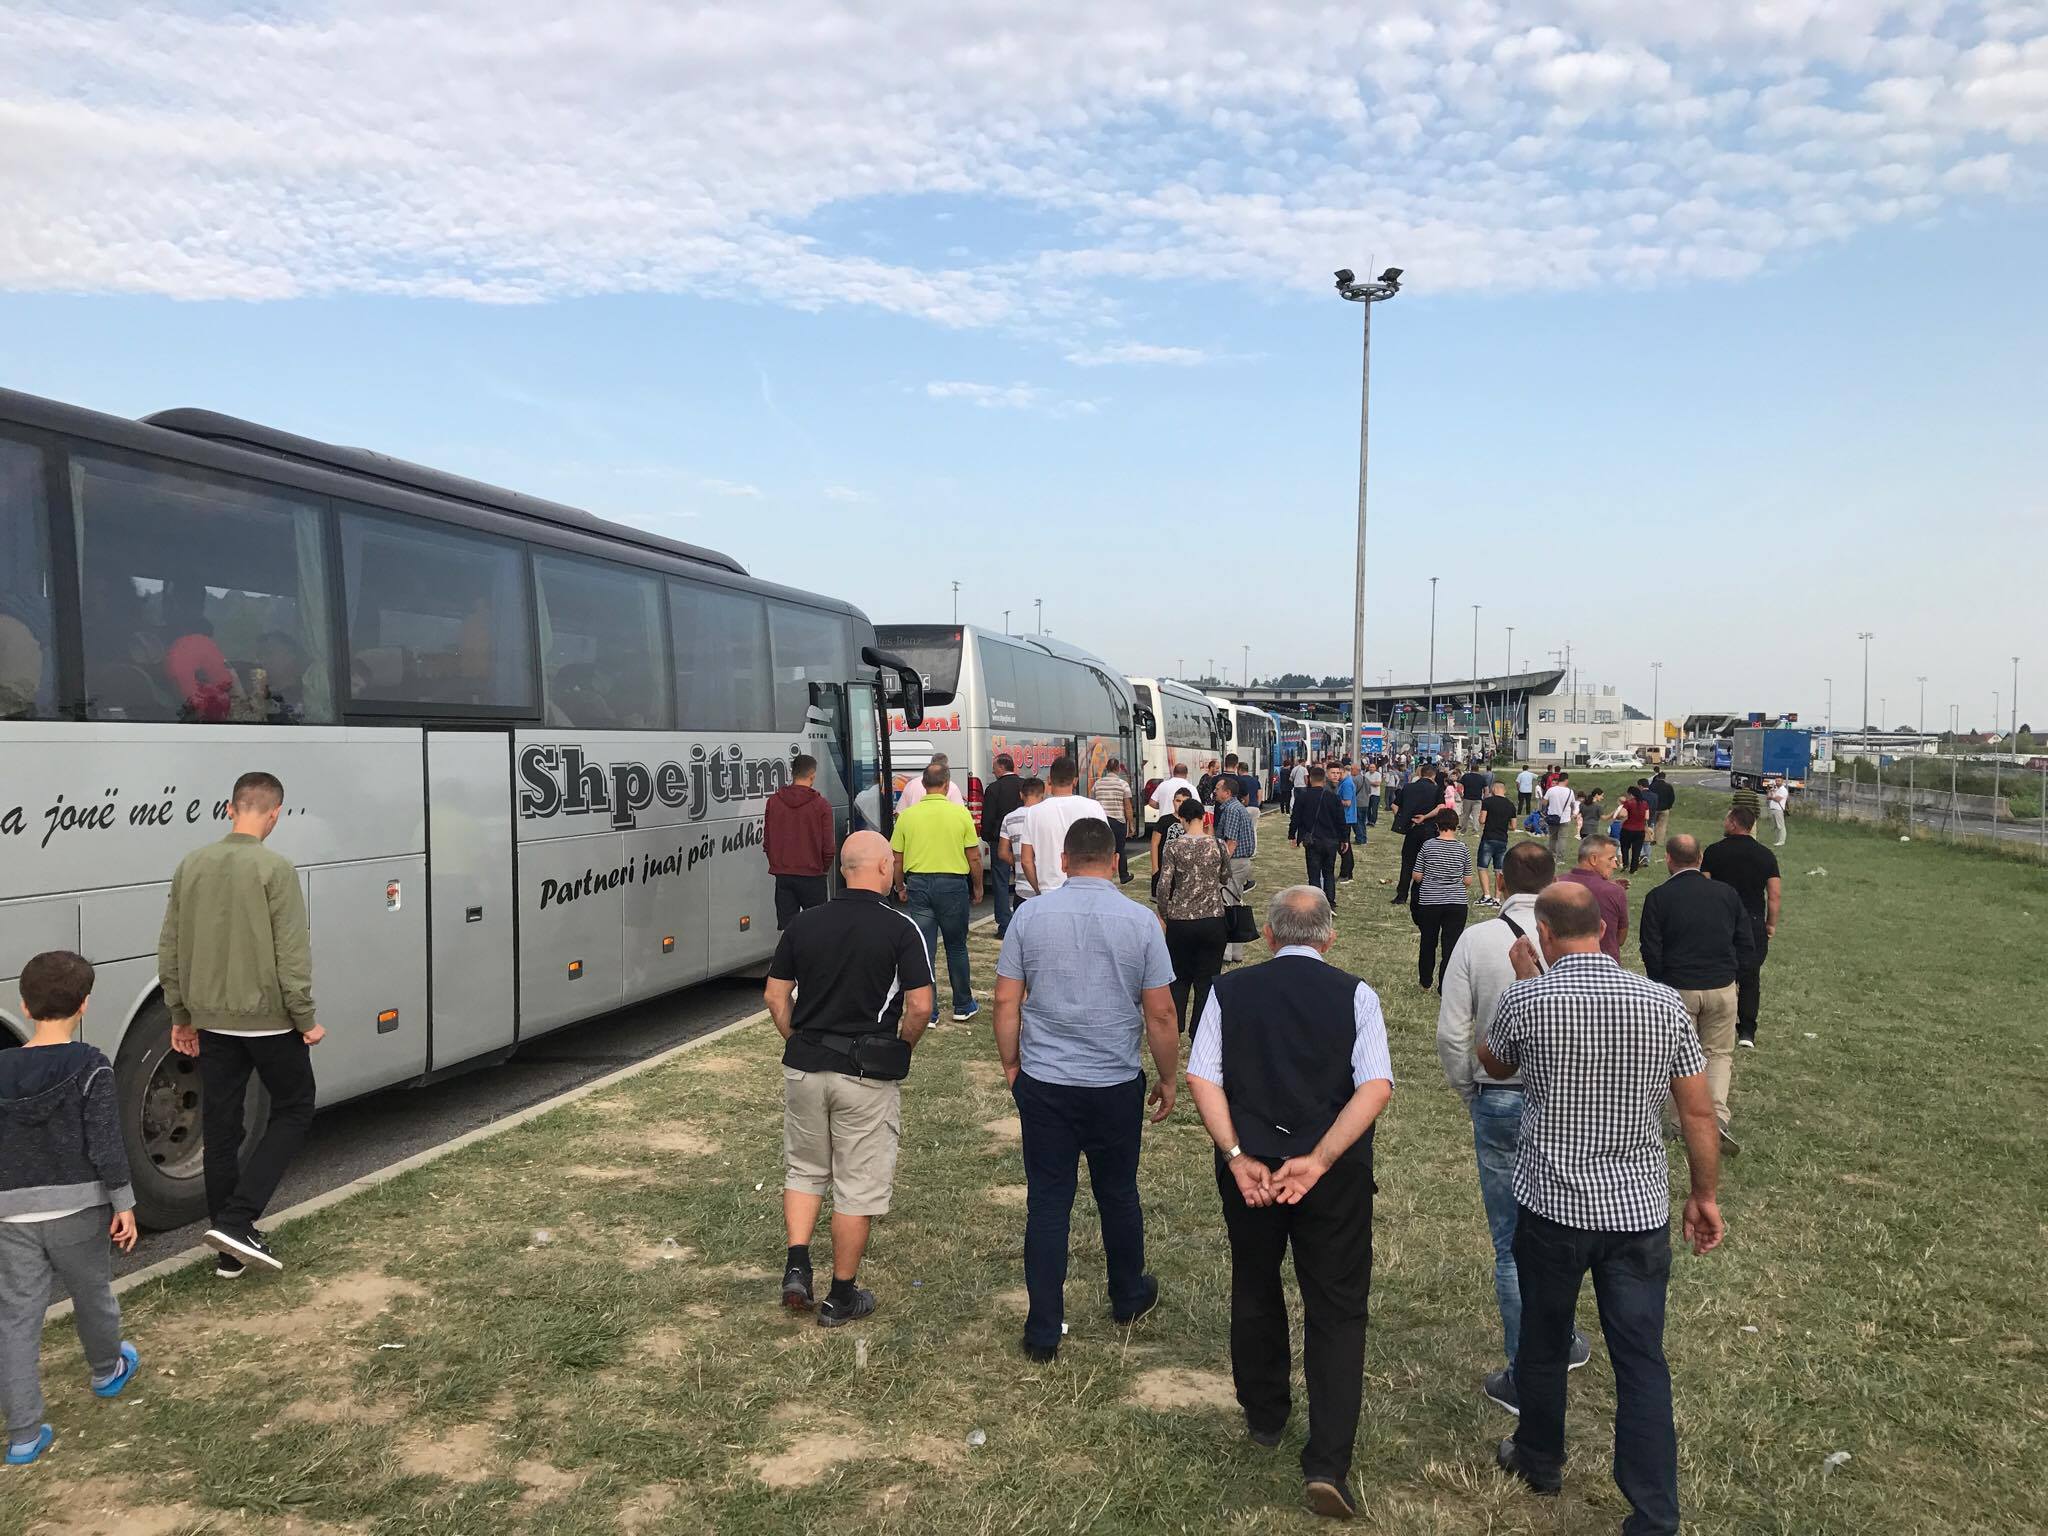 RÃ©sultat de recherche d'images pour "kolona shqiptar autobus presheva jone serbi"